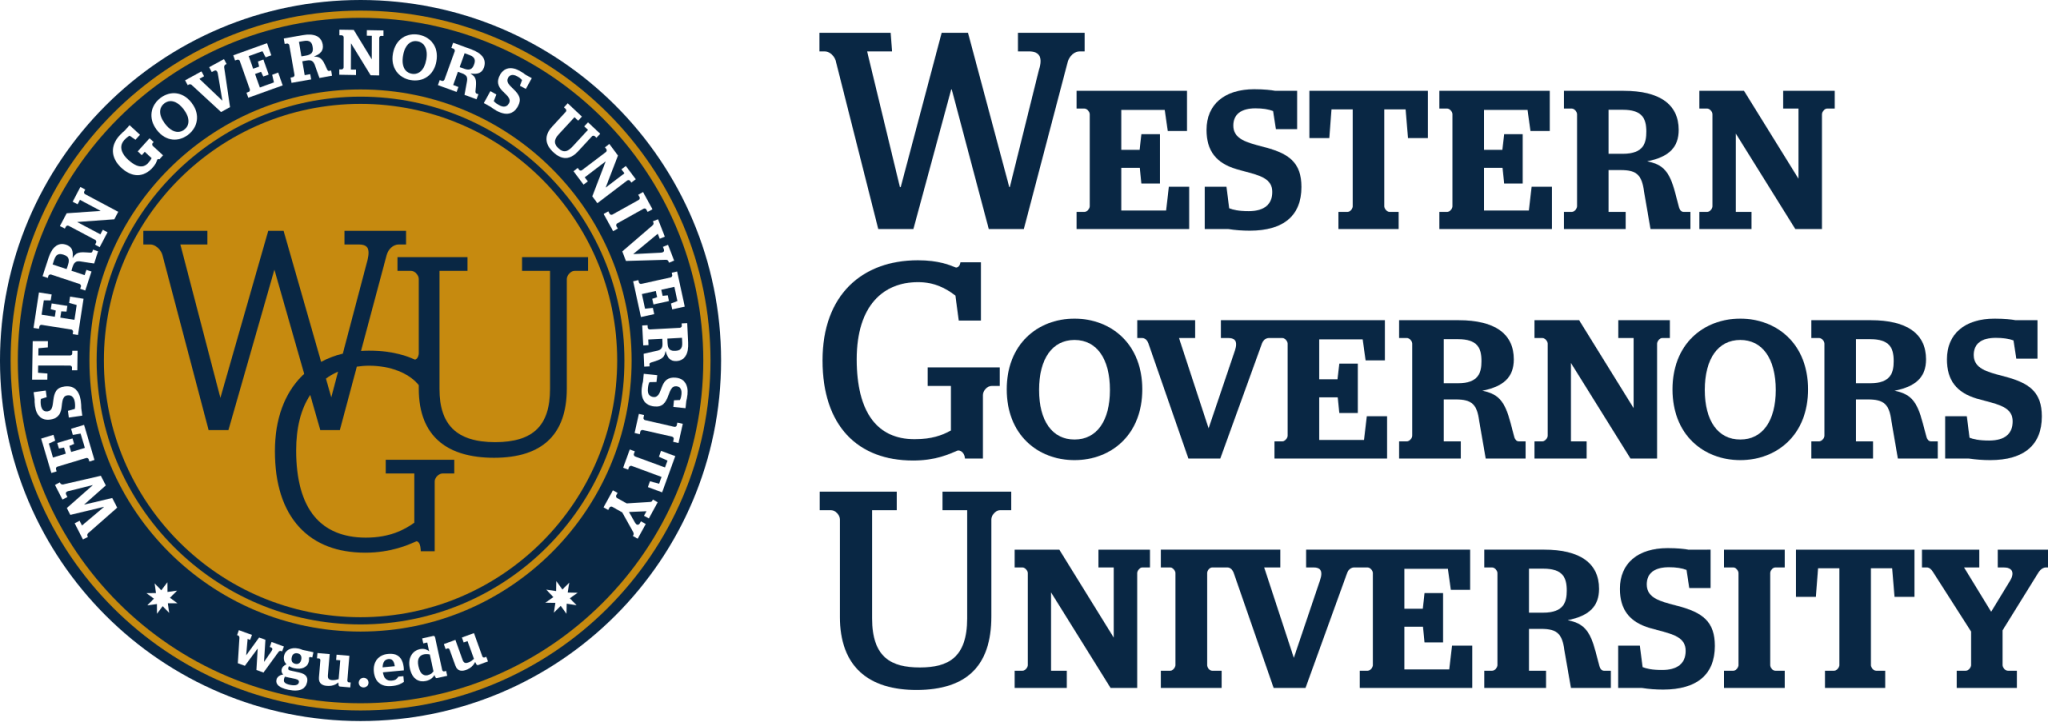 Western University. WGU. Logos of Western Universities. University of reading logo. Edu university